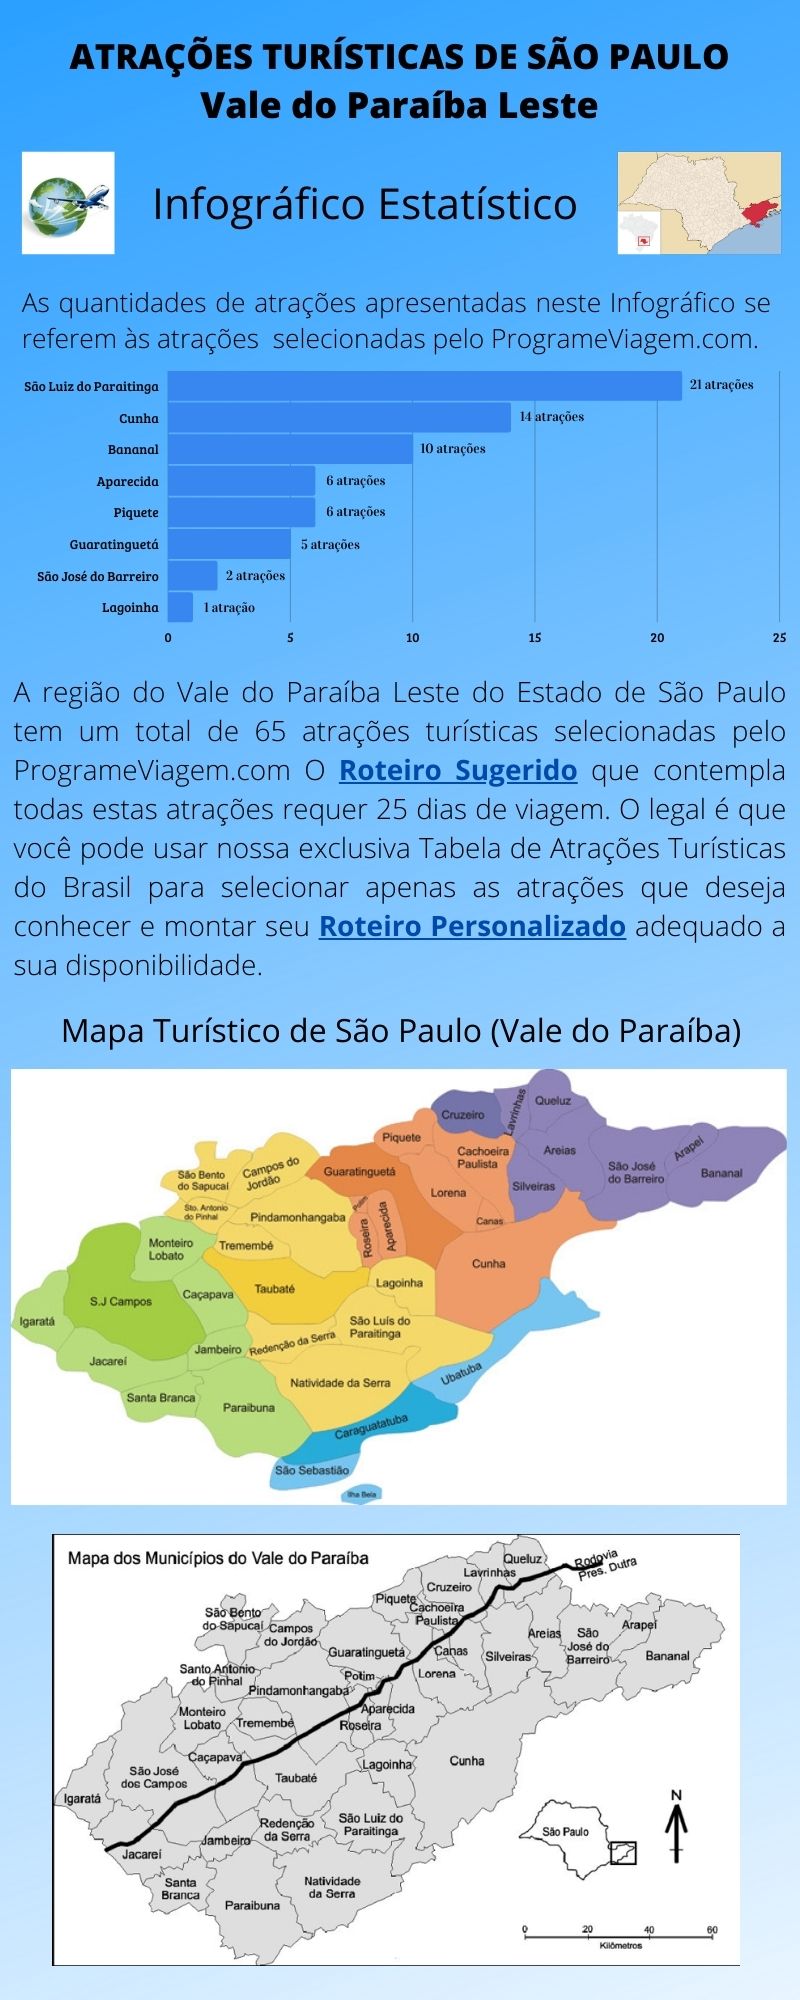 Infográfico Atrações Turísticas de São Paulo (Vale do Paraíba Leste)